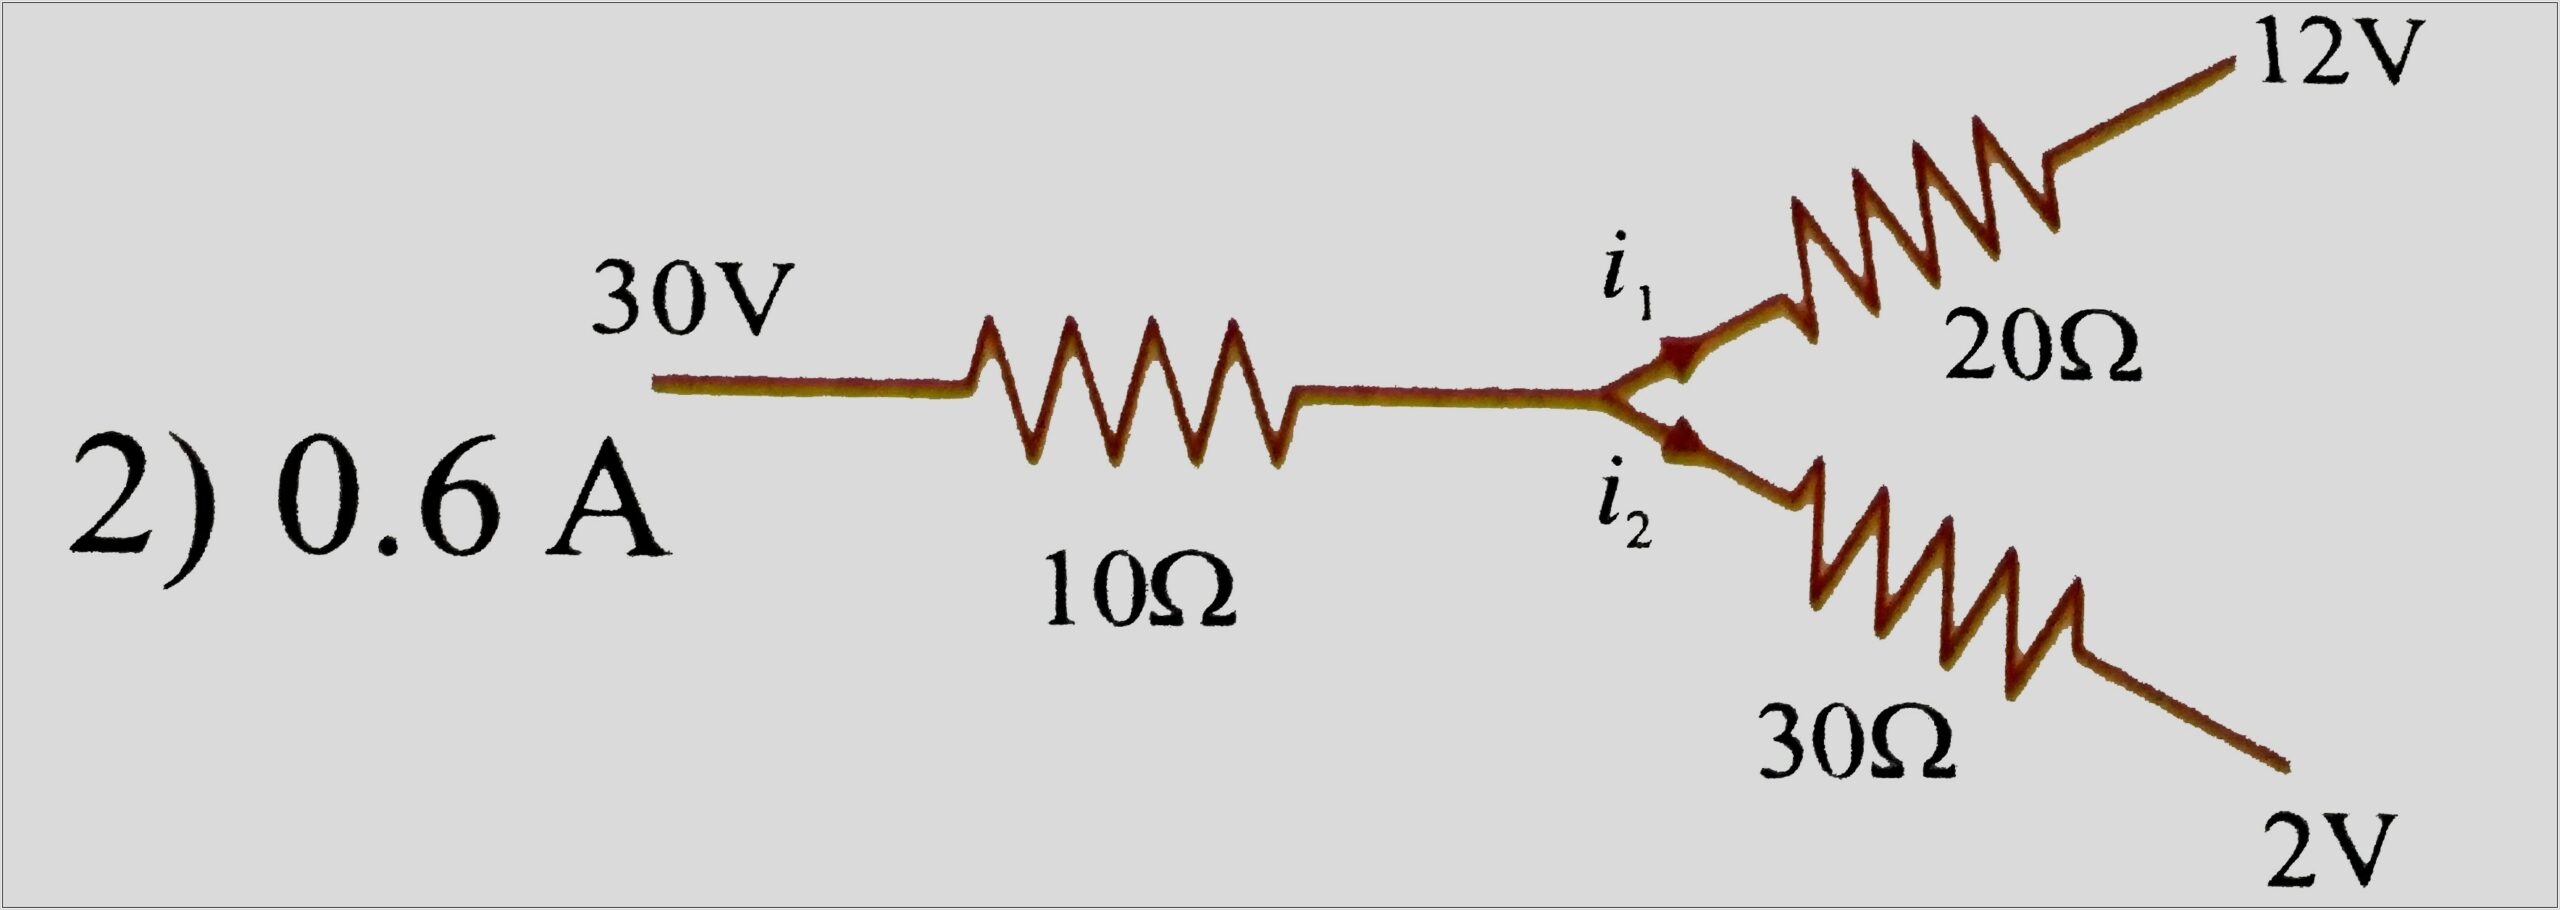 Electric Buzzer Circuit Diagram